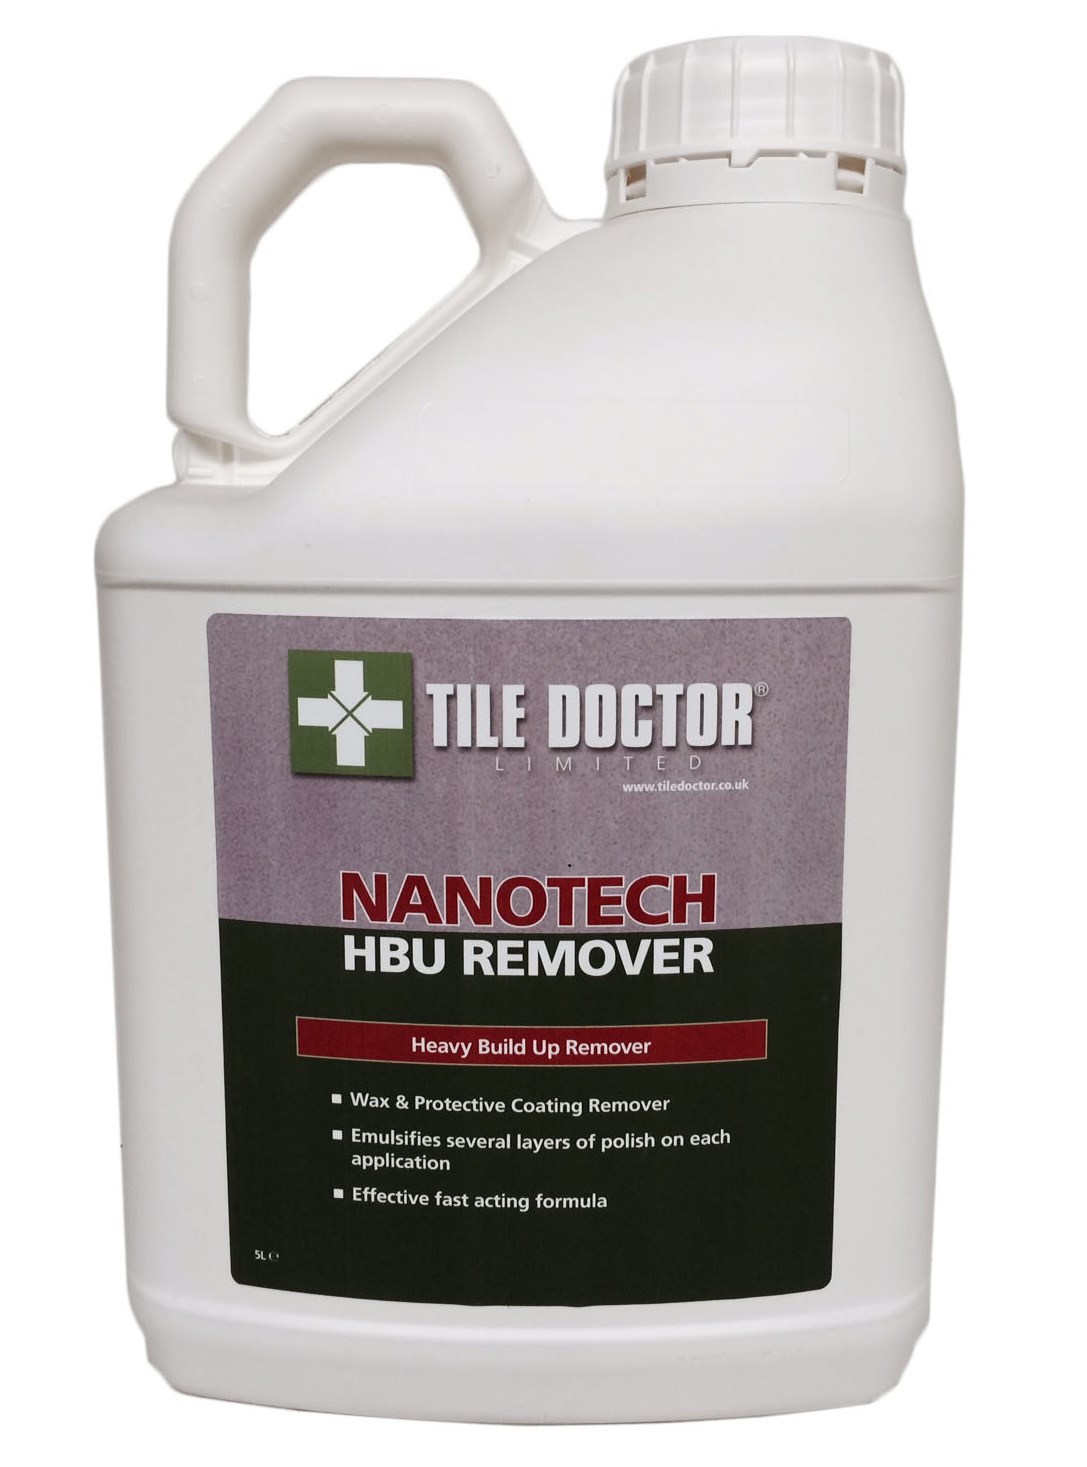 Tile Doctor Nanotech HBU Remover 1 Litre